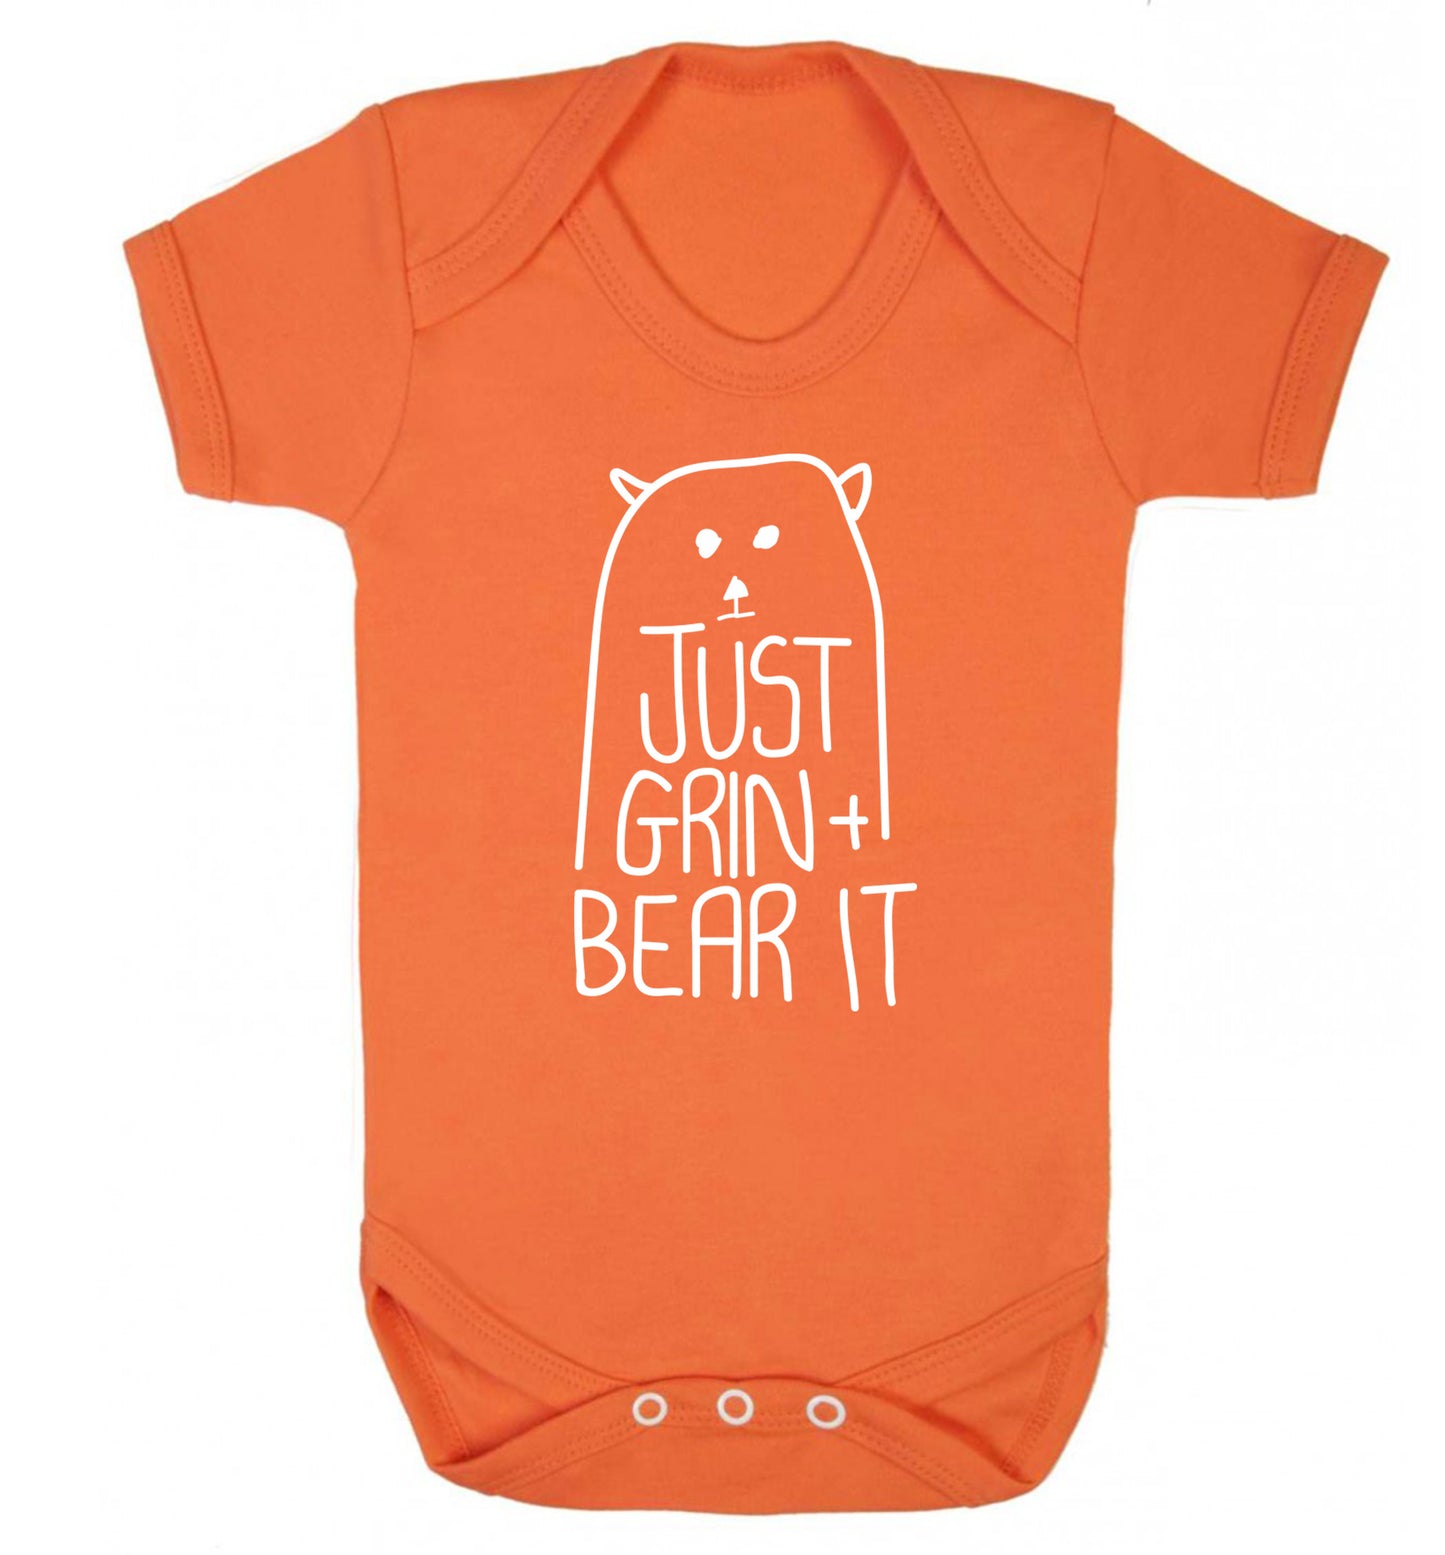 Just grin and bear it Baby Vest orange 18-24 months